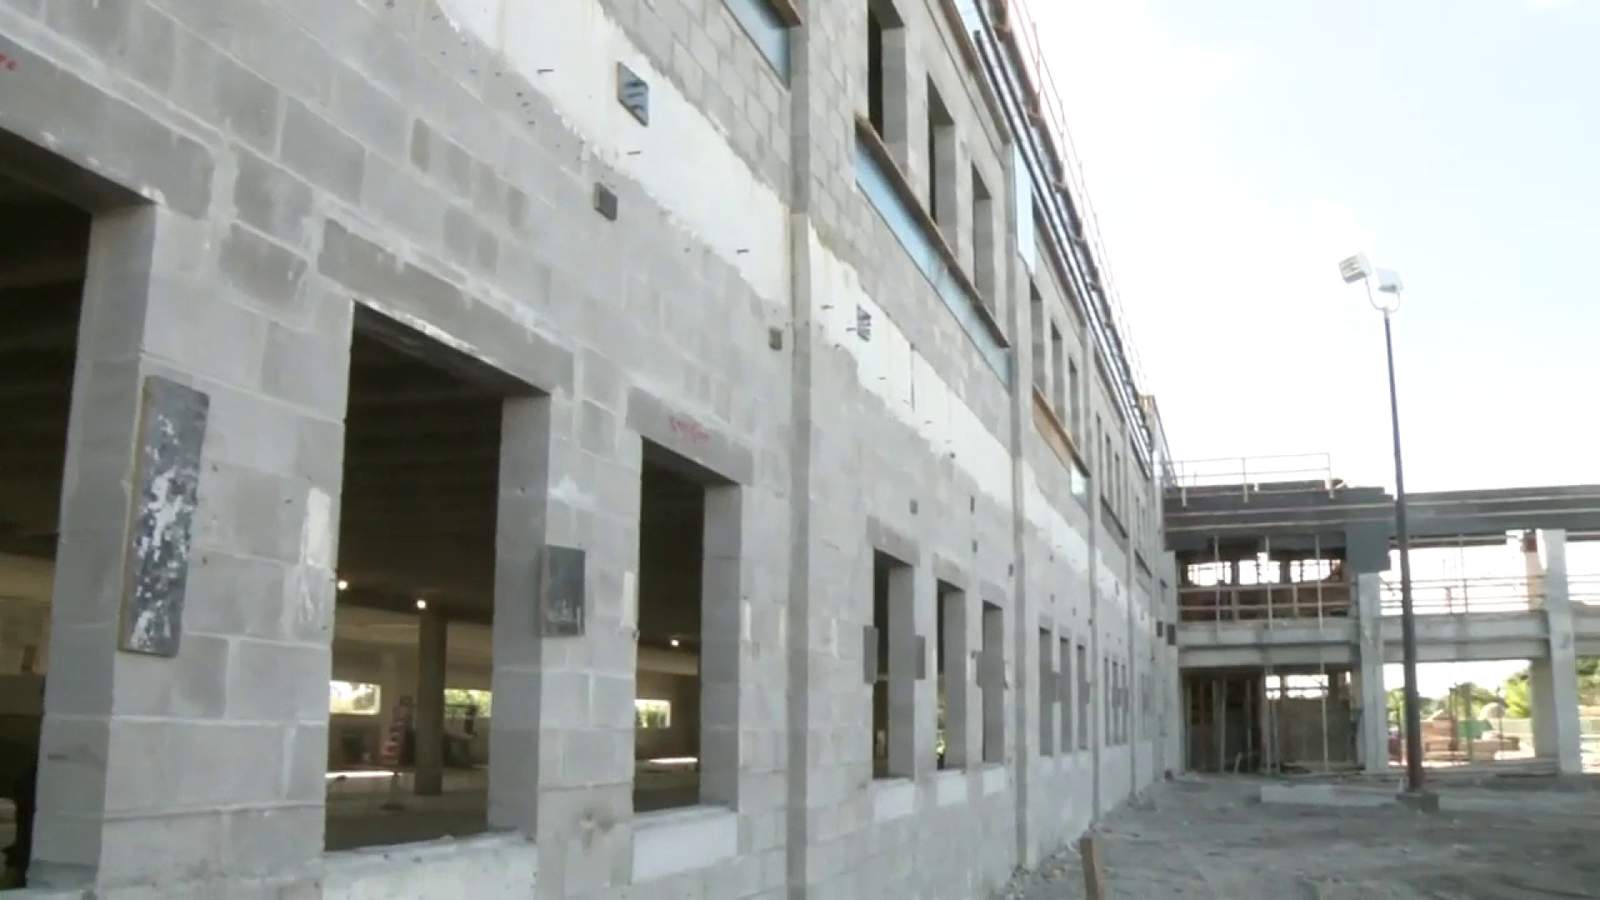 Marjory Stoneman Douglas High School’s new building to open in August